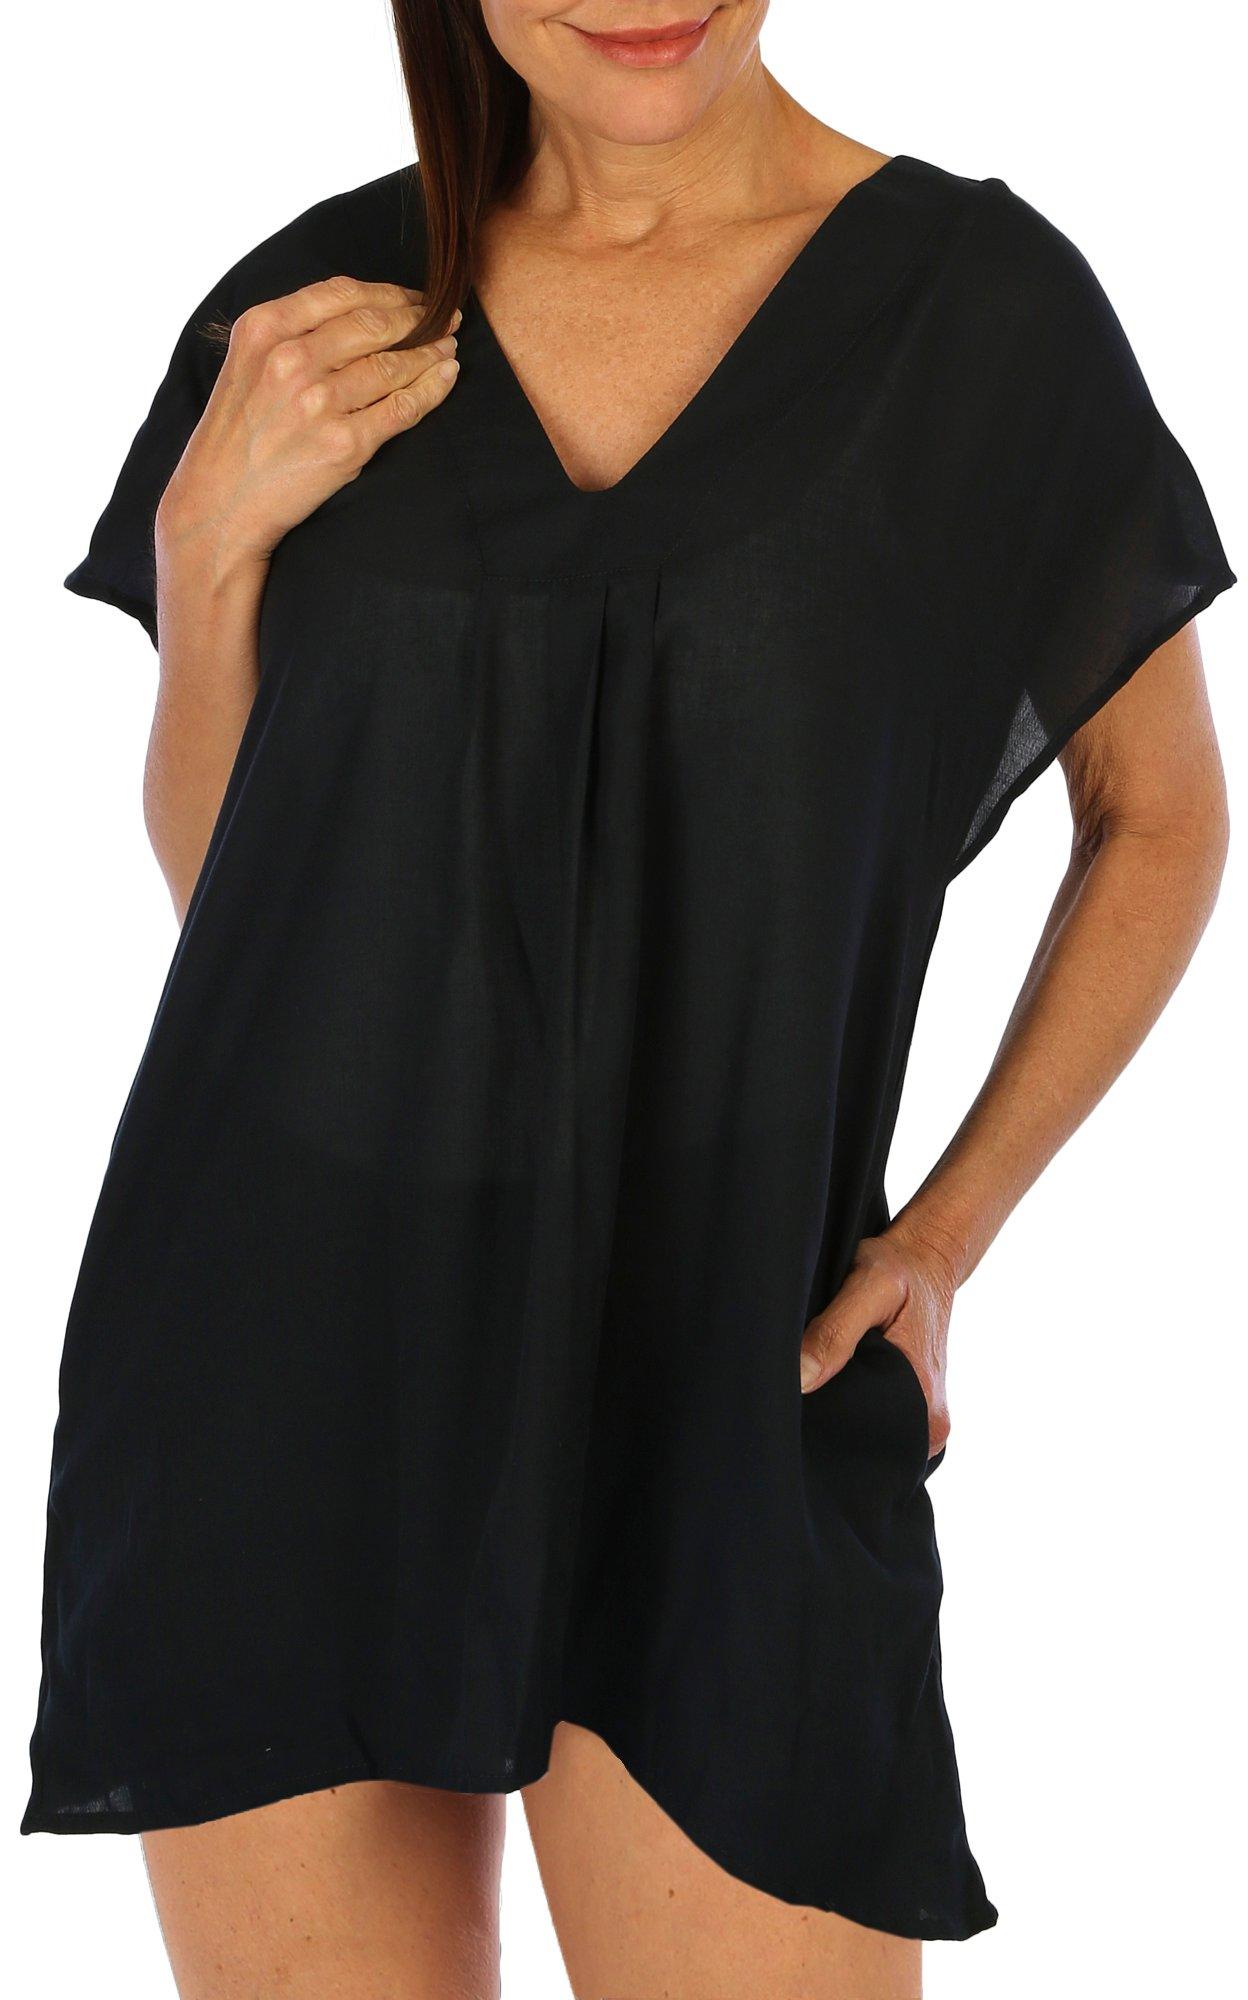 Catalina Womens Short Sleeve Pocket Coverup Dress